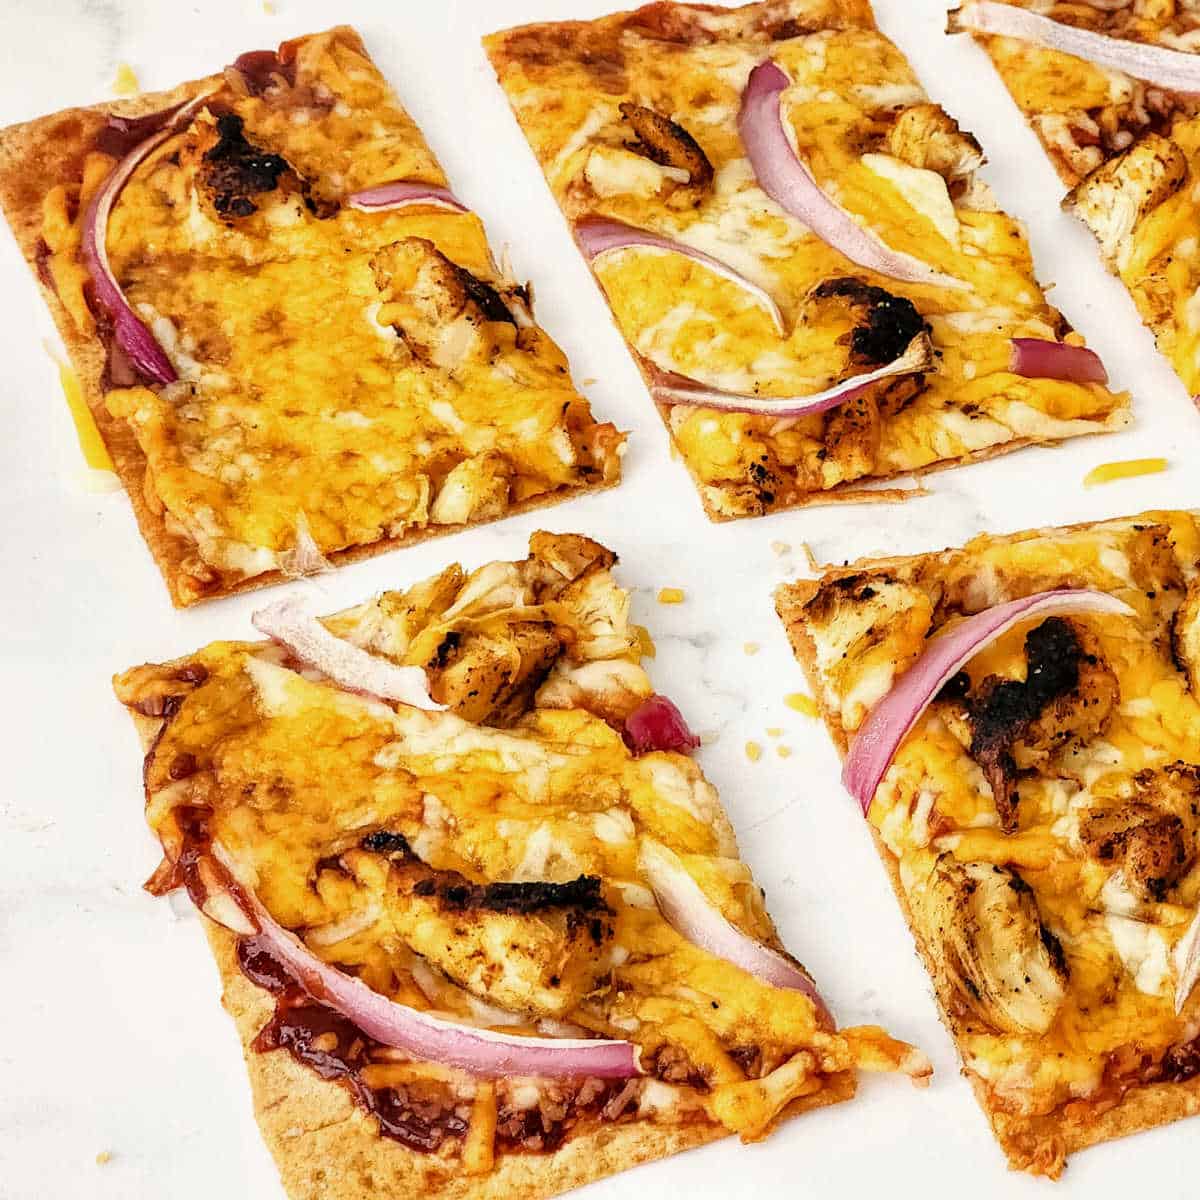 Sliced of bbq chicken flatbread pizza.